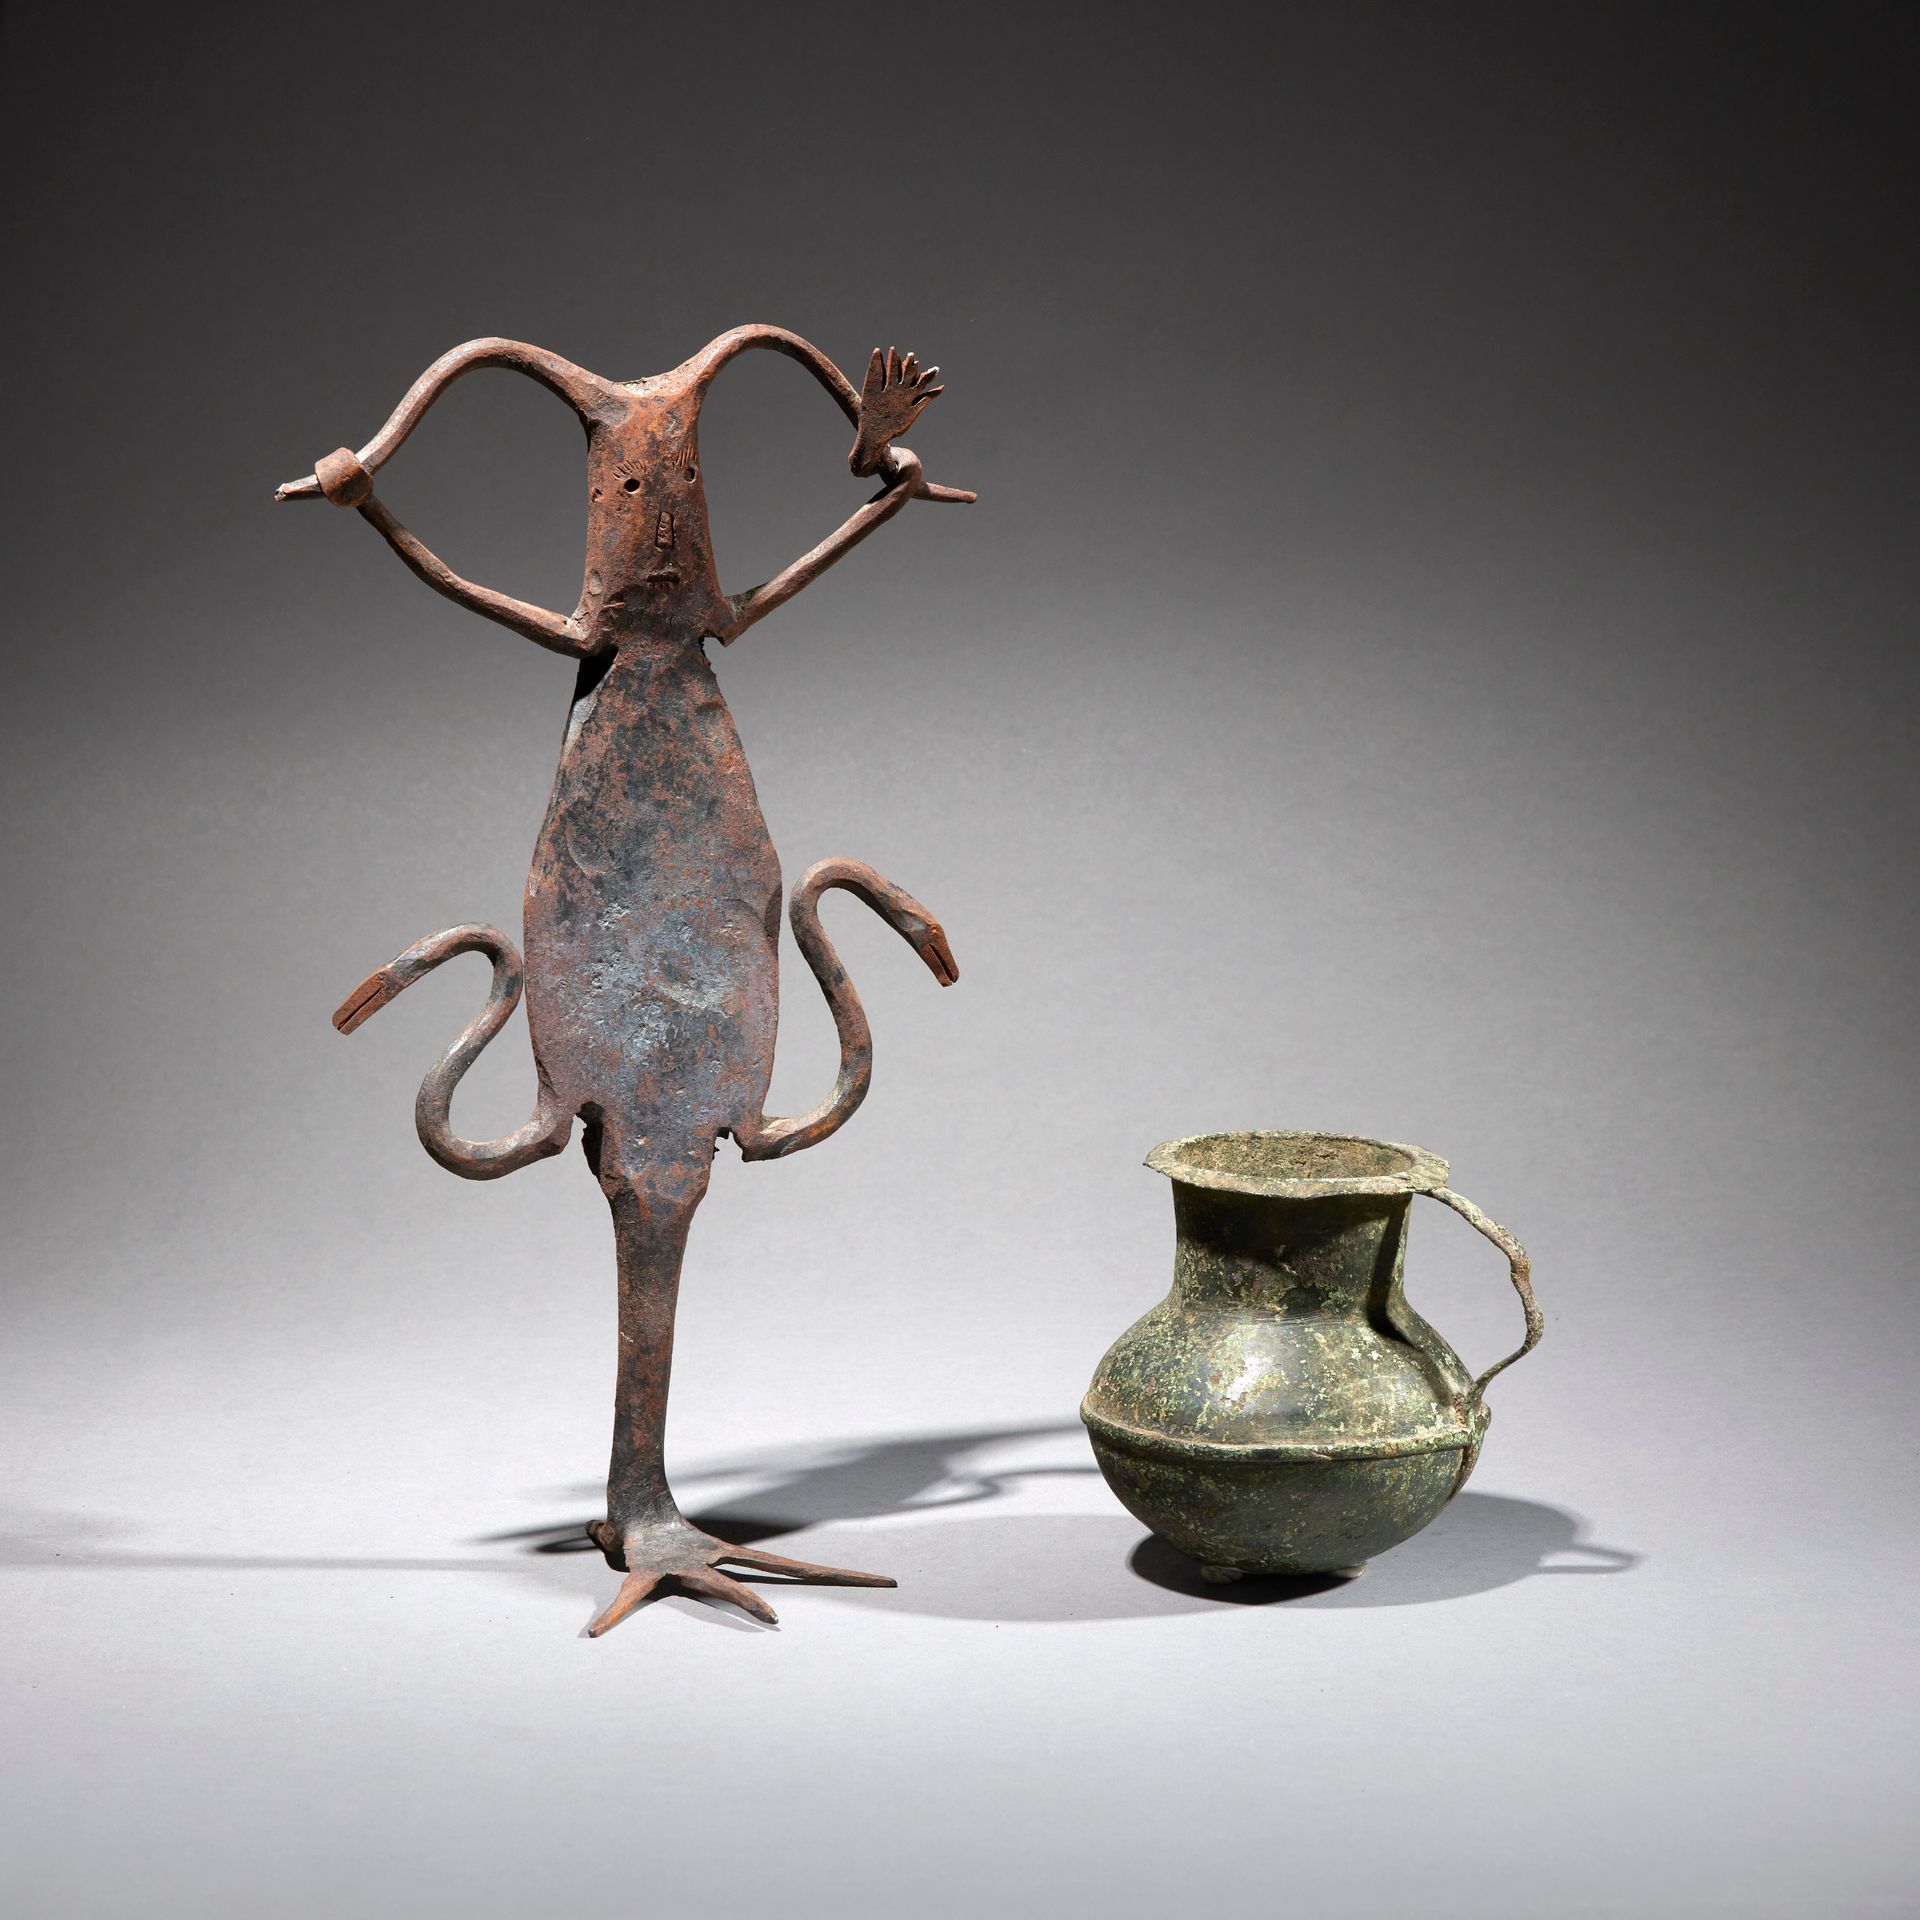 Null 两件人工制品

西非

青铜，铁

H.10.5和31.3厘米



一套两件青铜器，包括一个铁制的伏都教雕像和青铜把手壶。